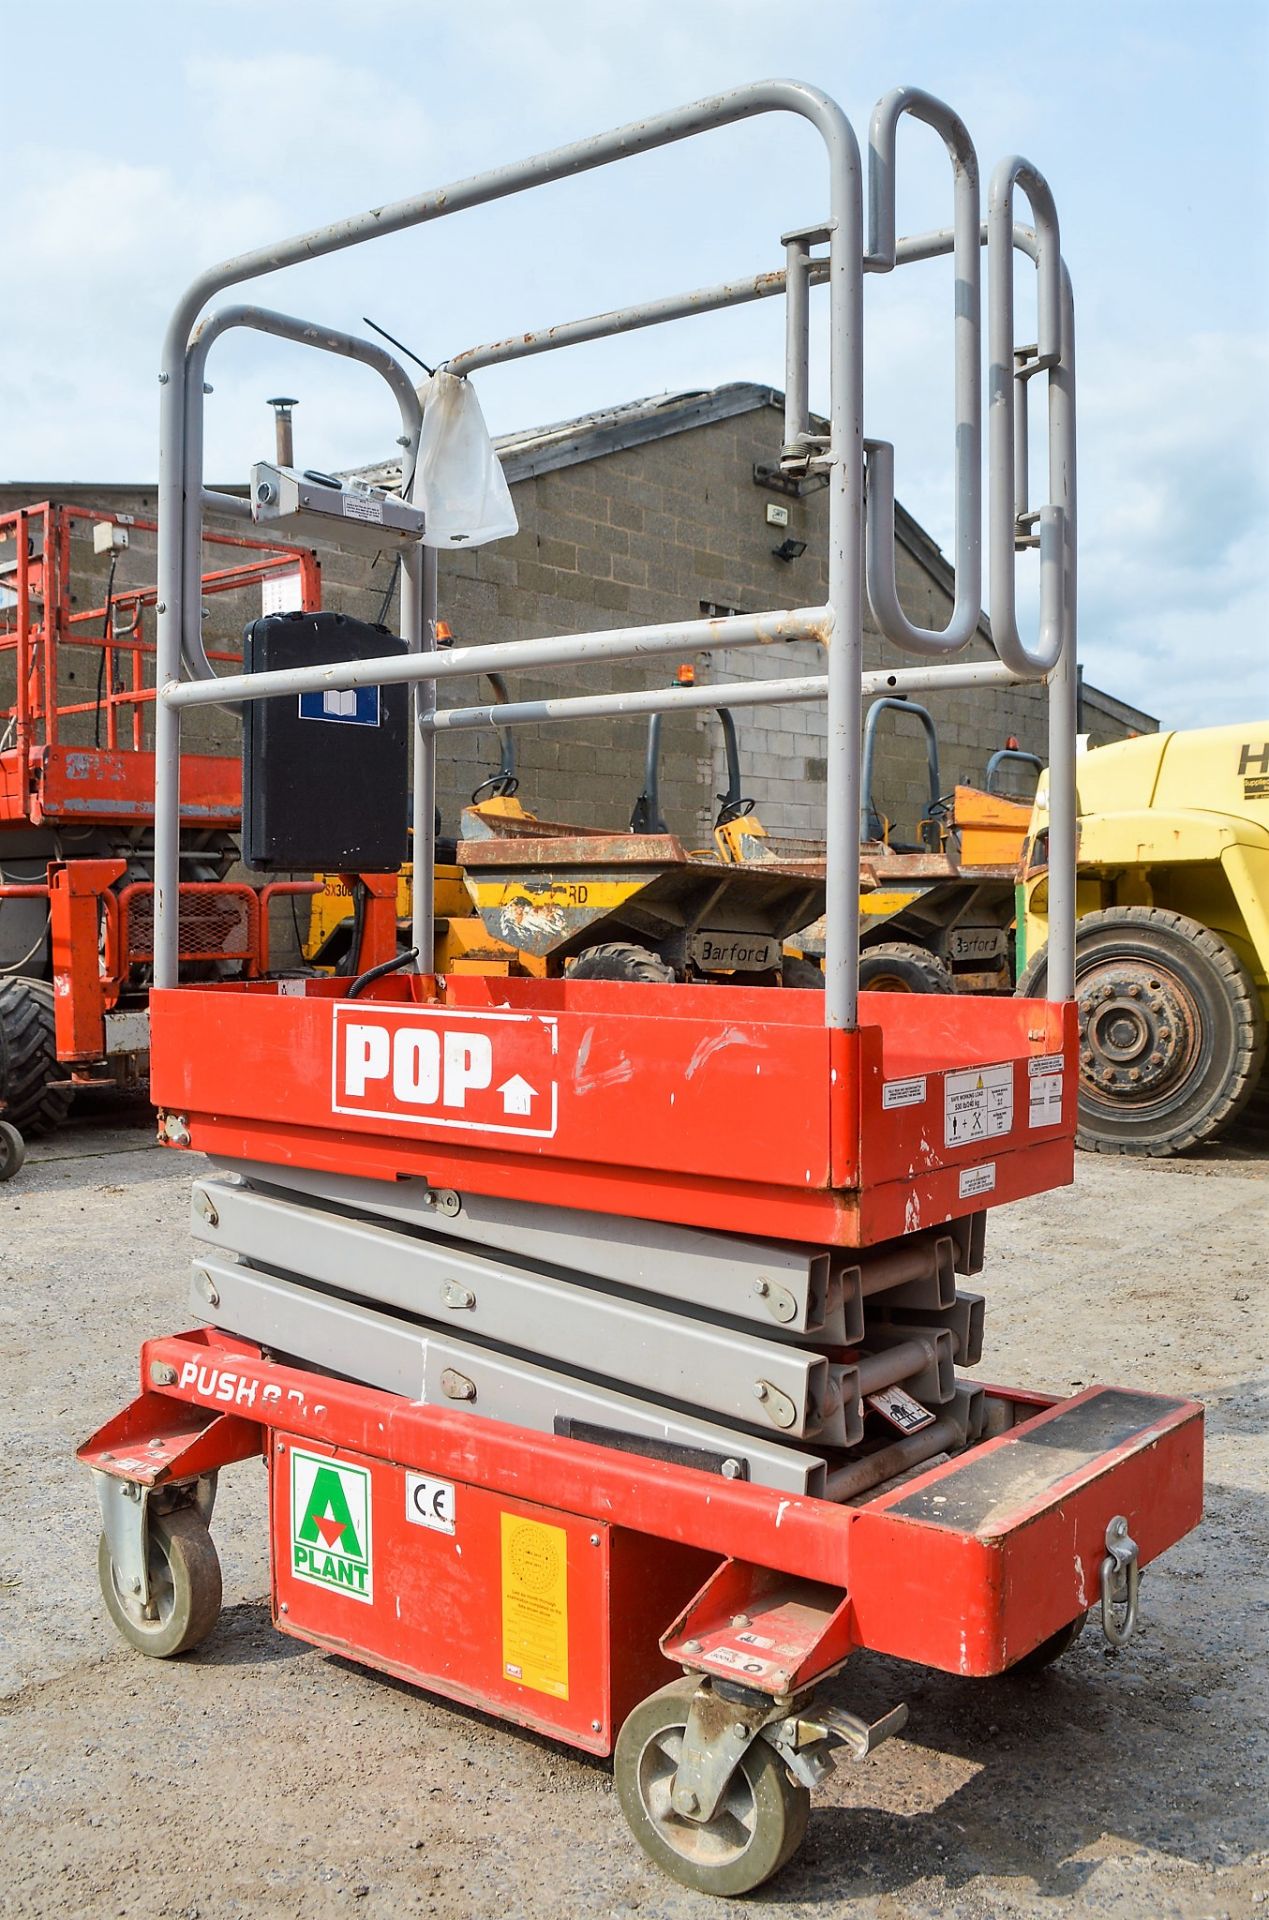 Pop-Up Push 8 Pro battery electric access platform A621061 - Image 3 of 4